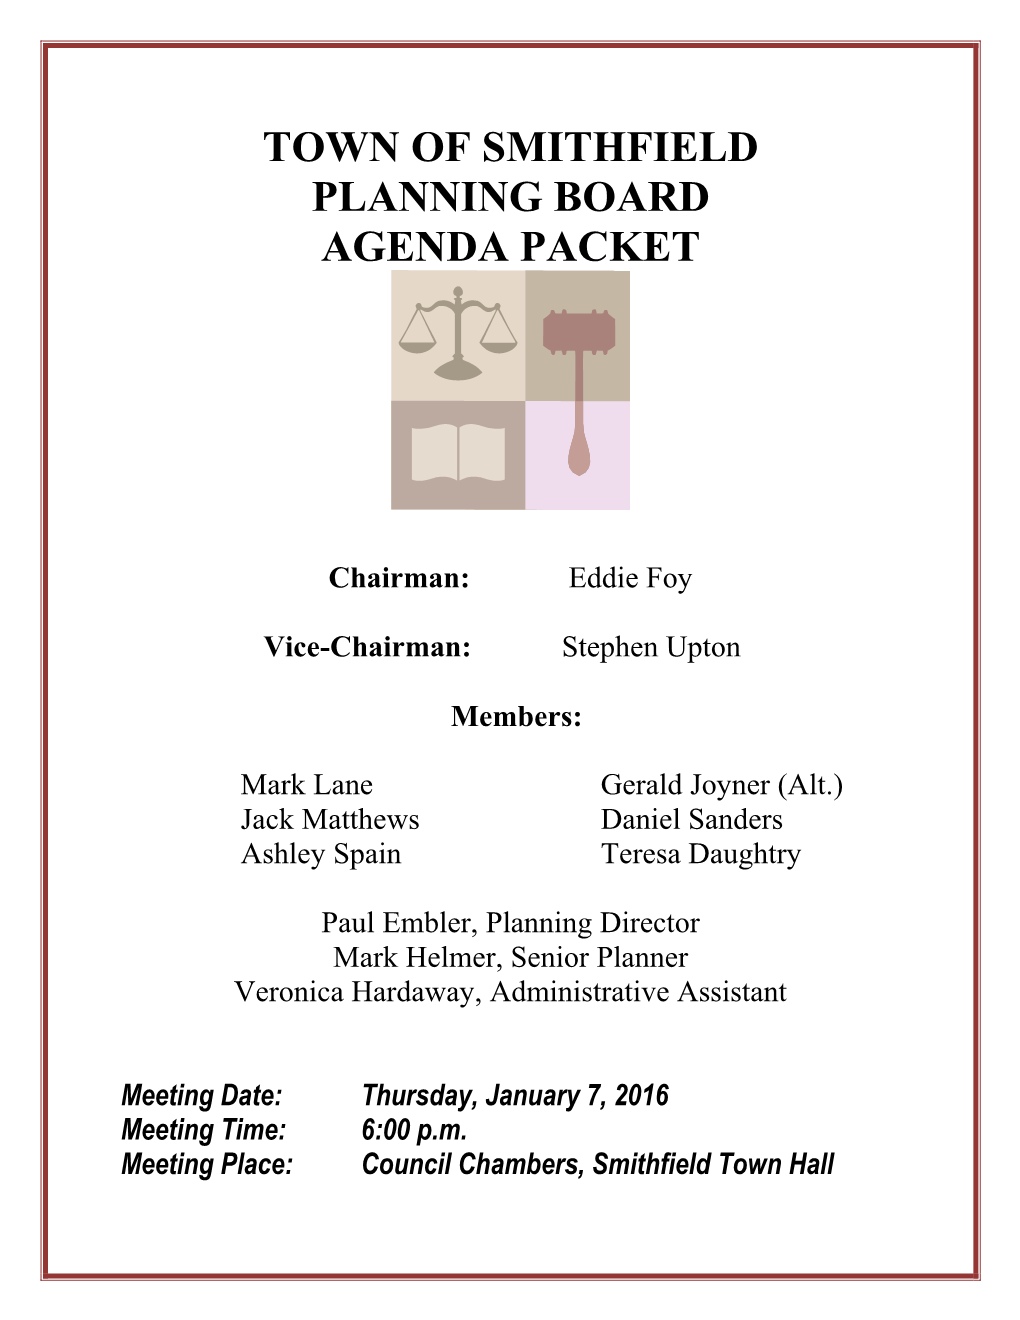 Town of Smithfield Planning Board Agenda Packet